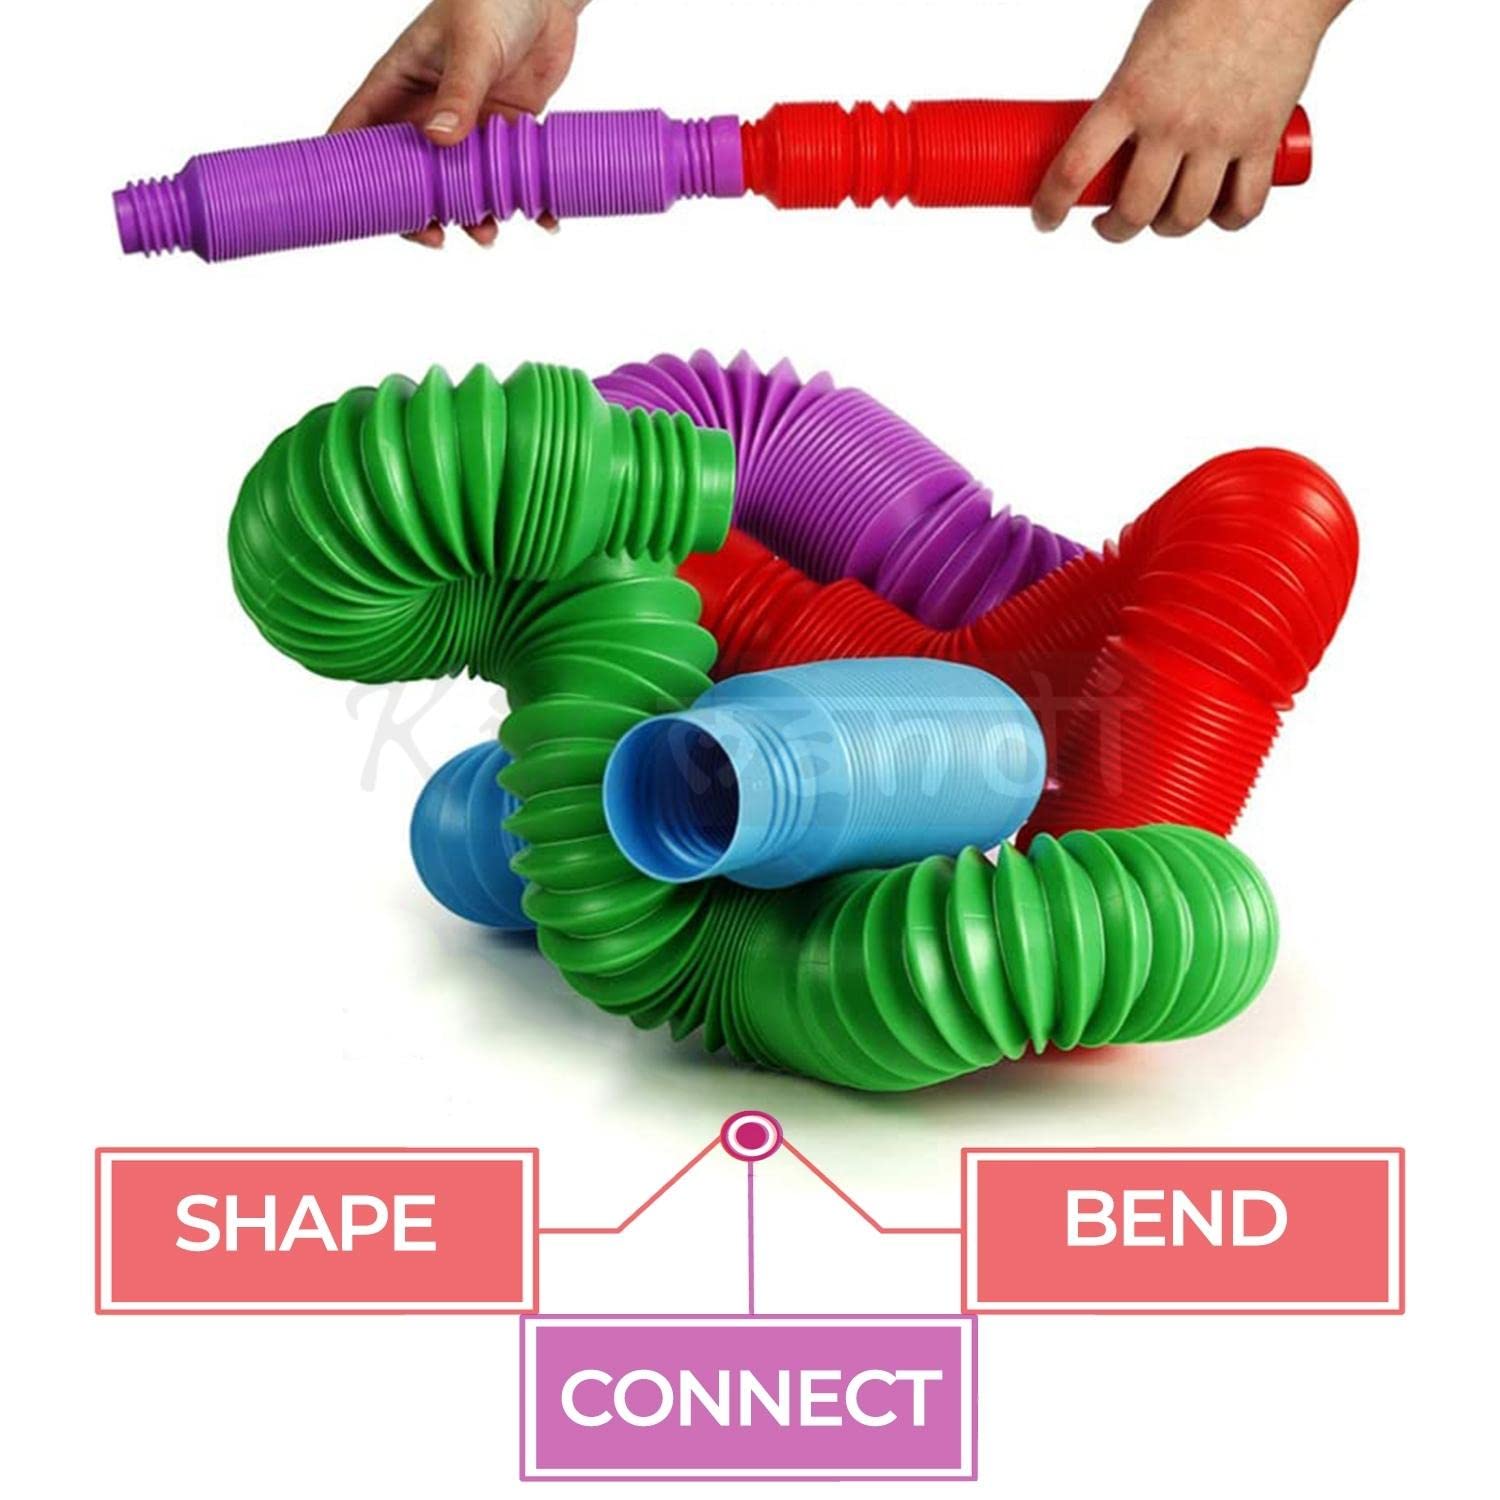 Kids Mandi pop tubes sensory fidget toy - stress reducer.